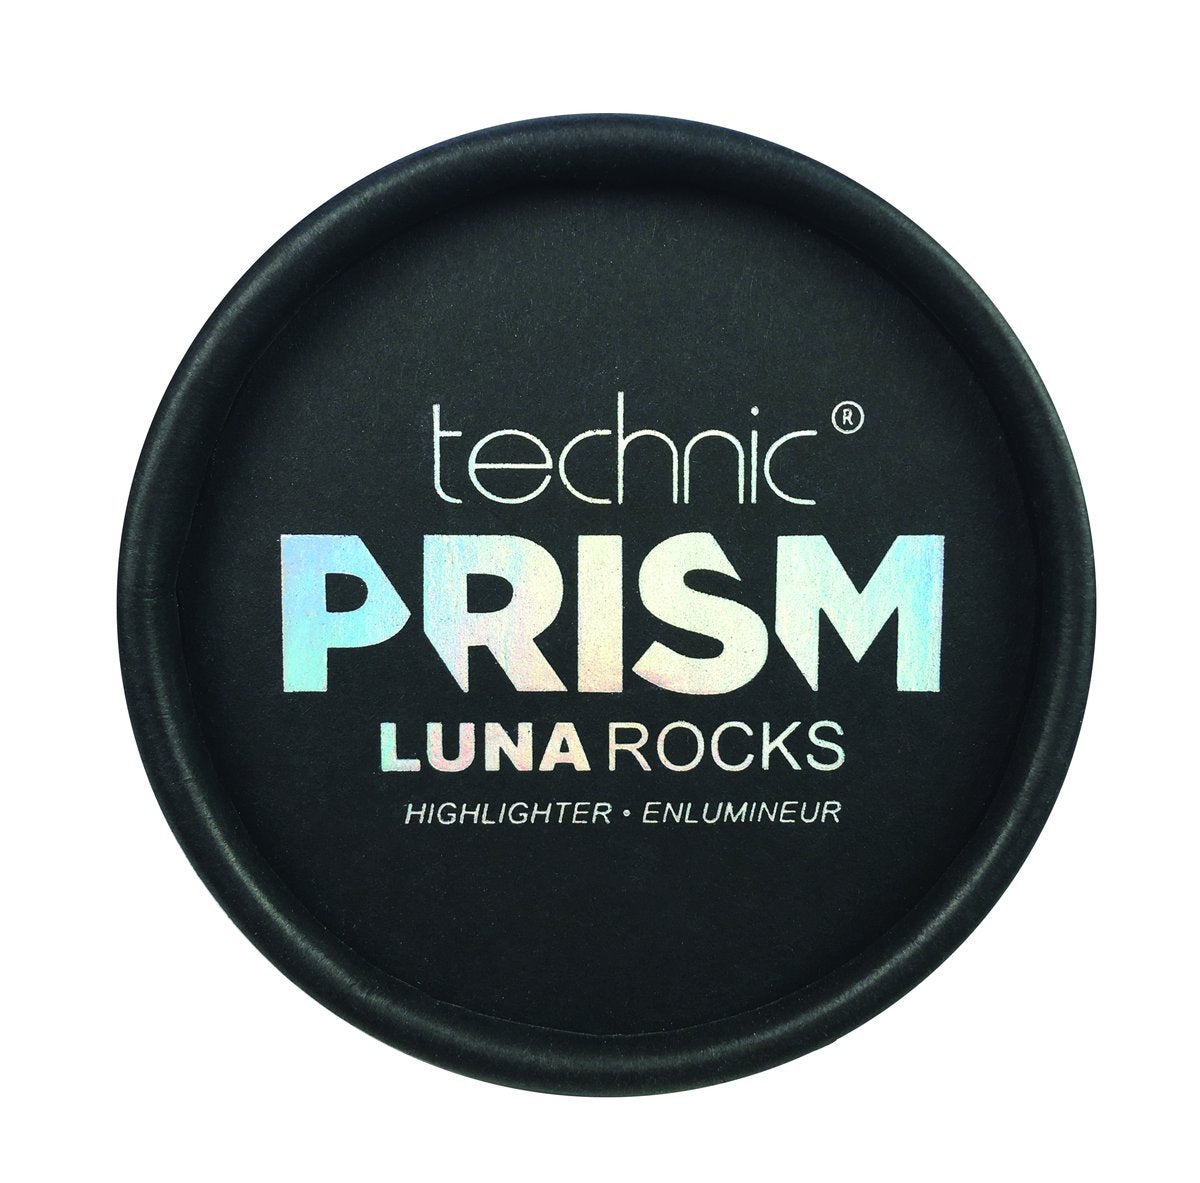 Technic Prism Luna Rocks Highlighter